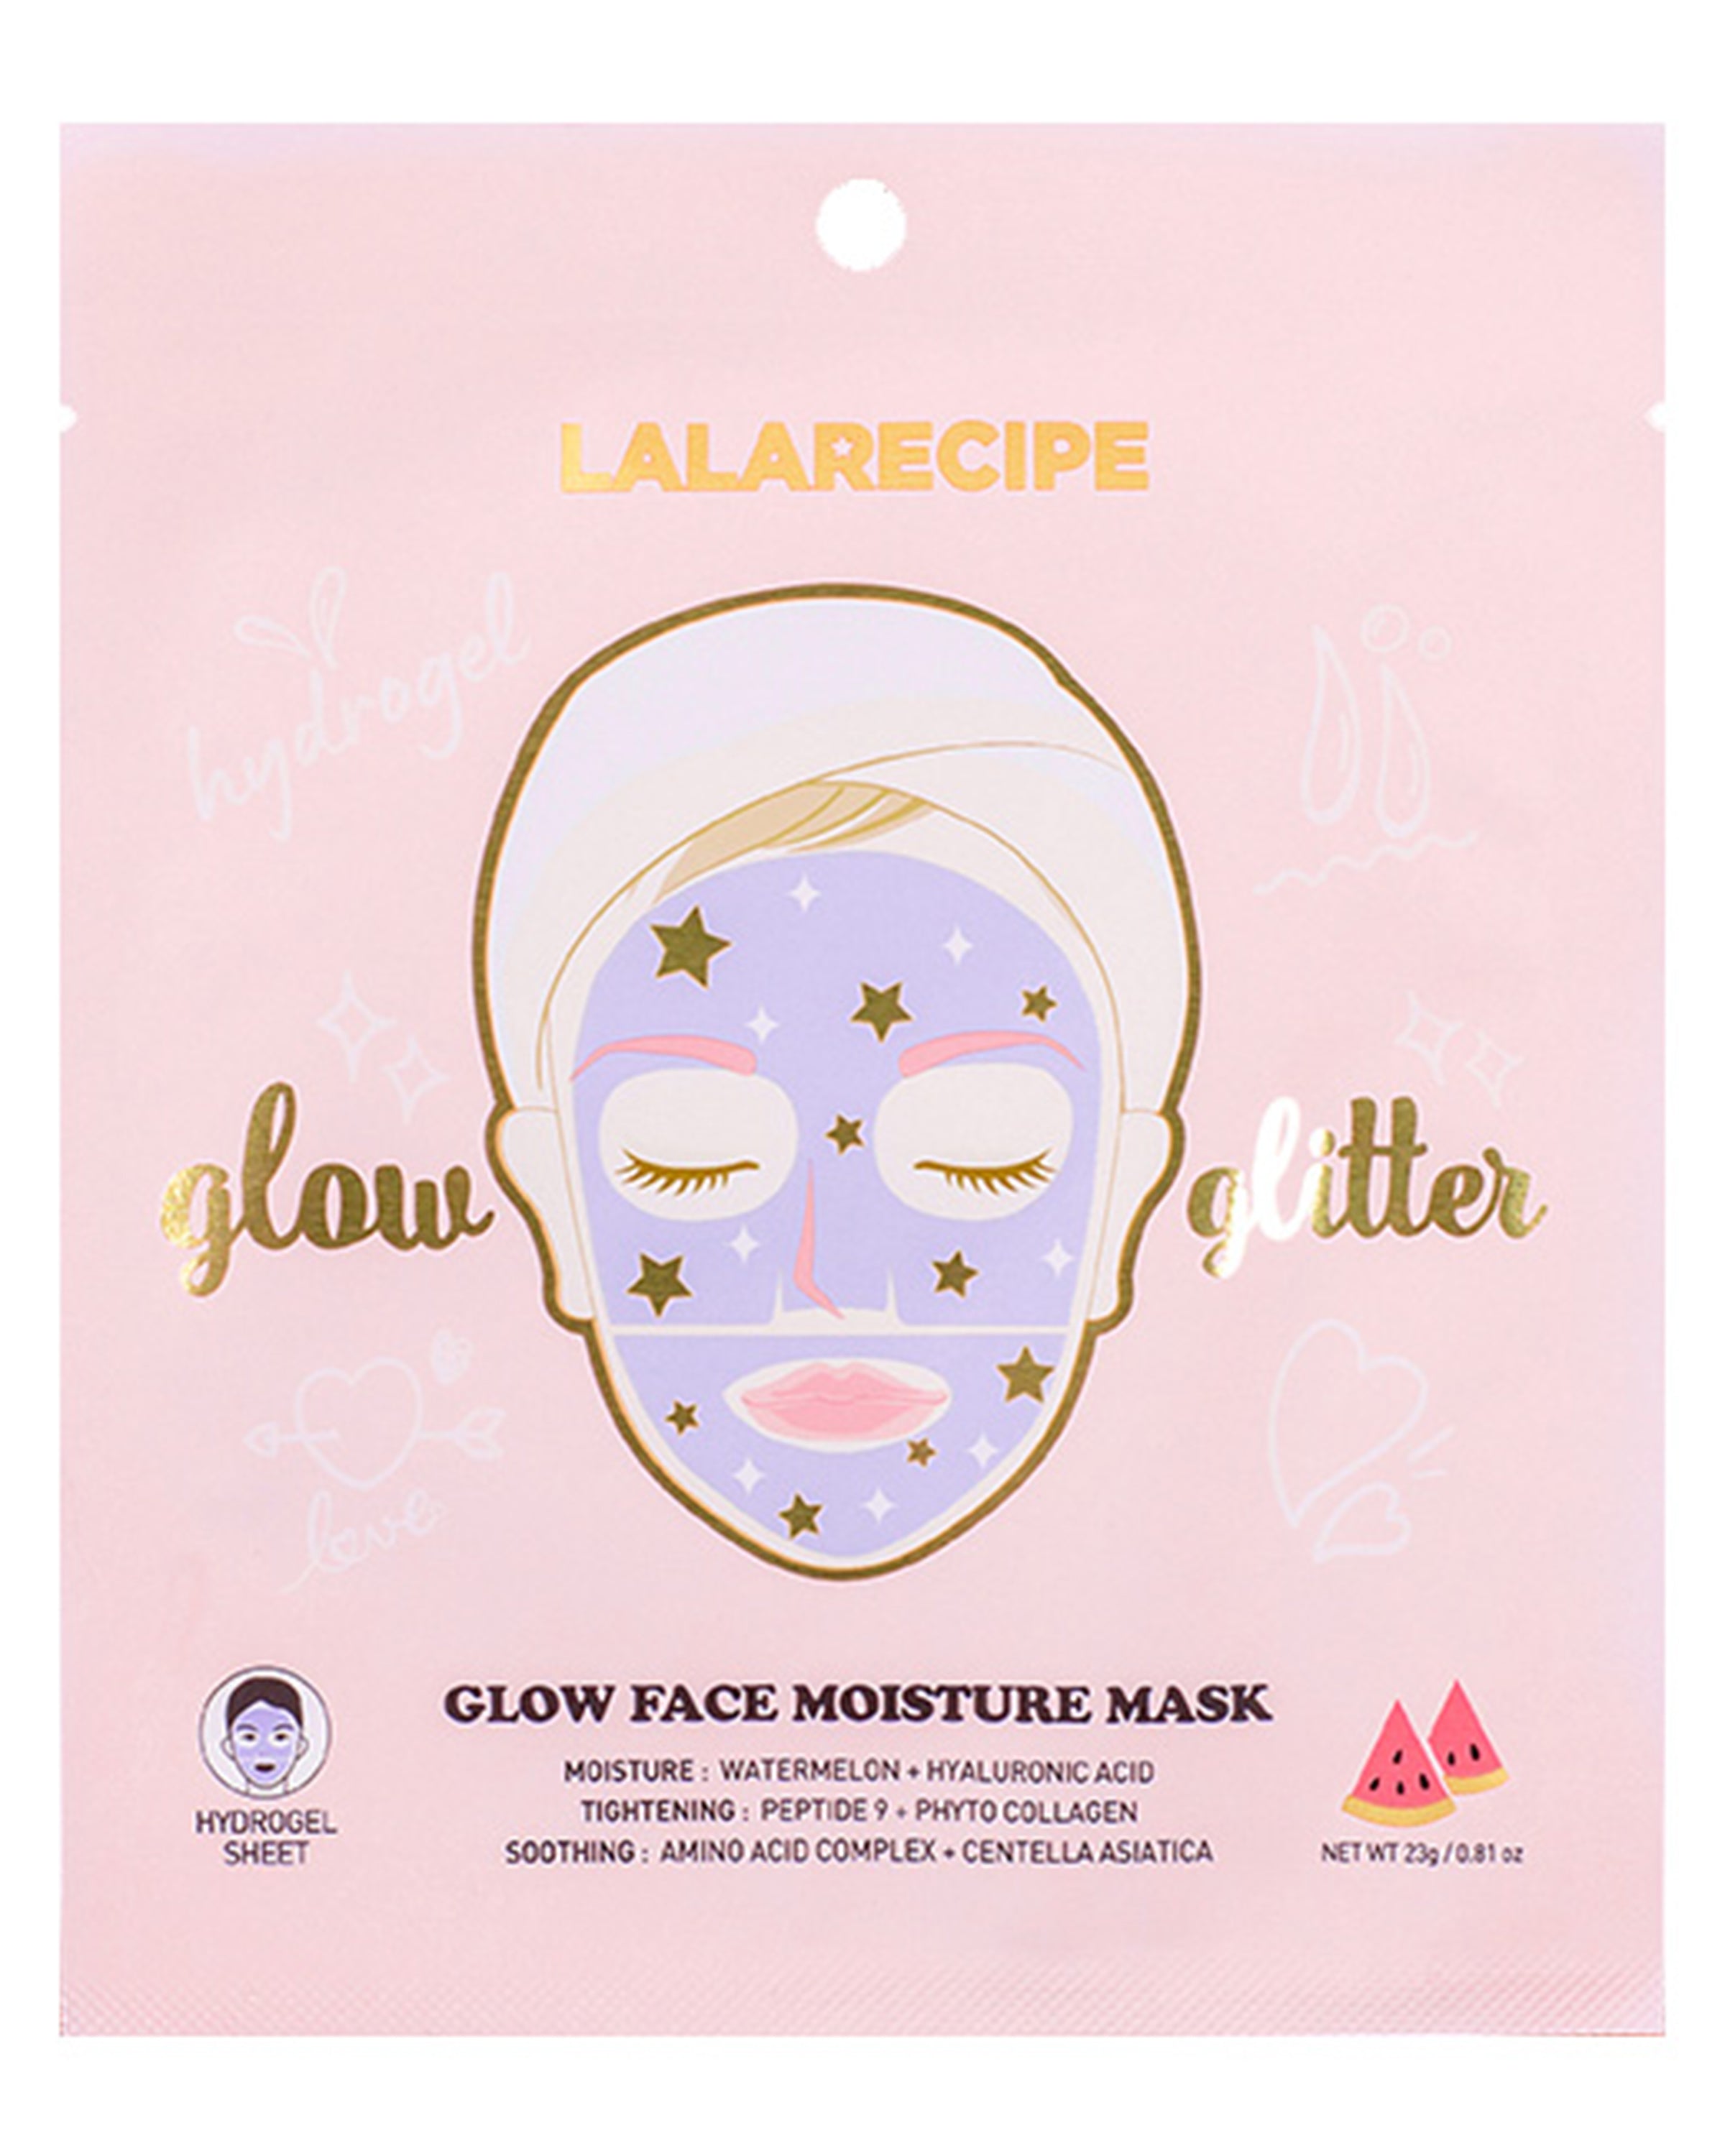 Lalarecipe Glow Face Moisture Mask 10pcs